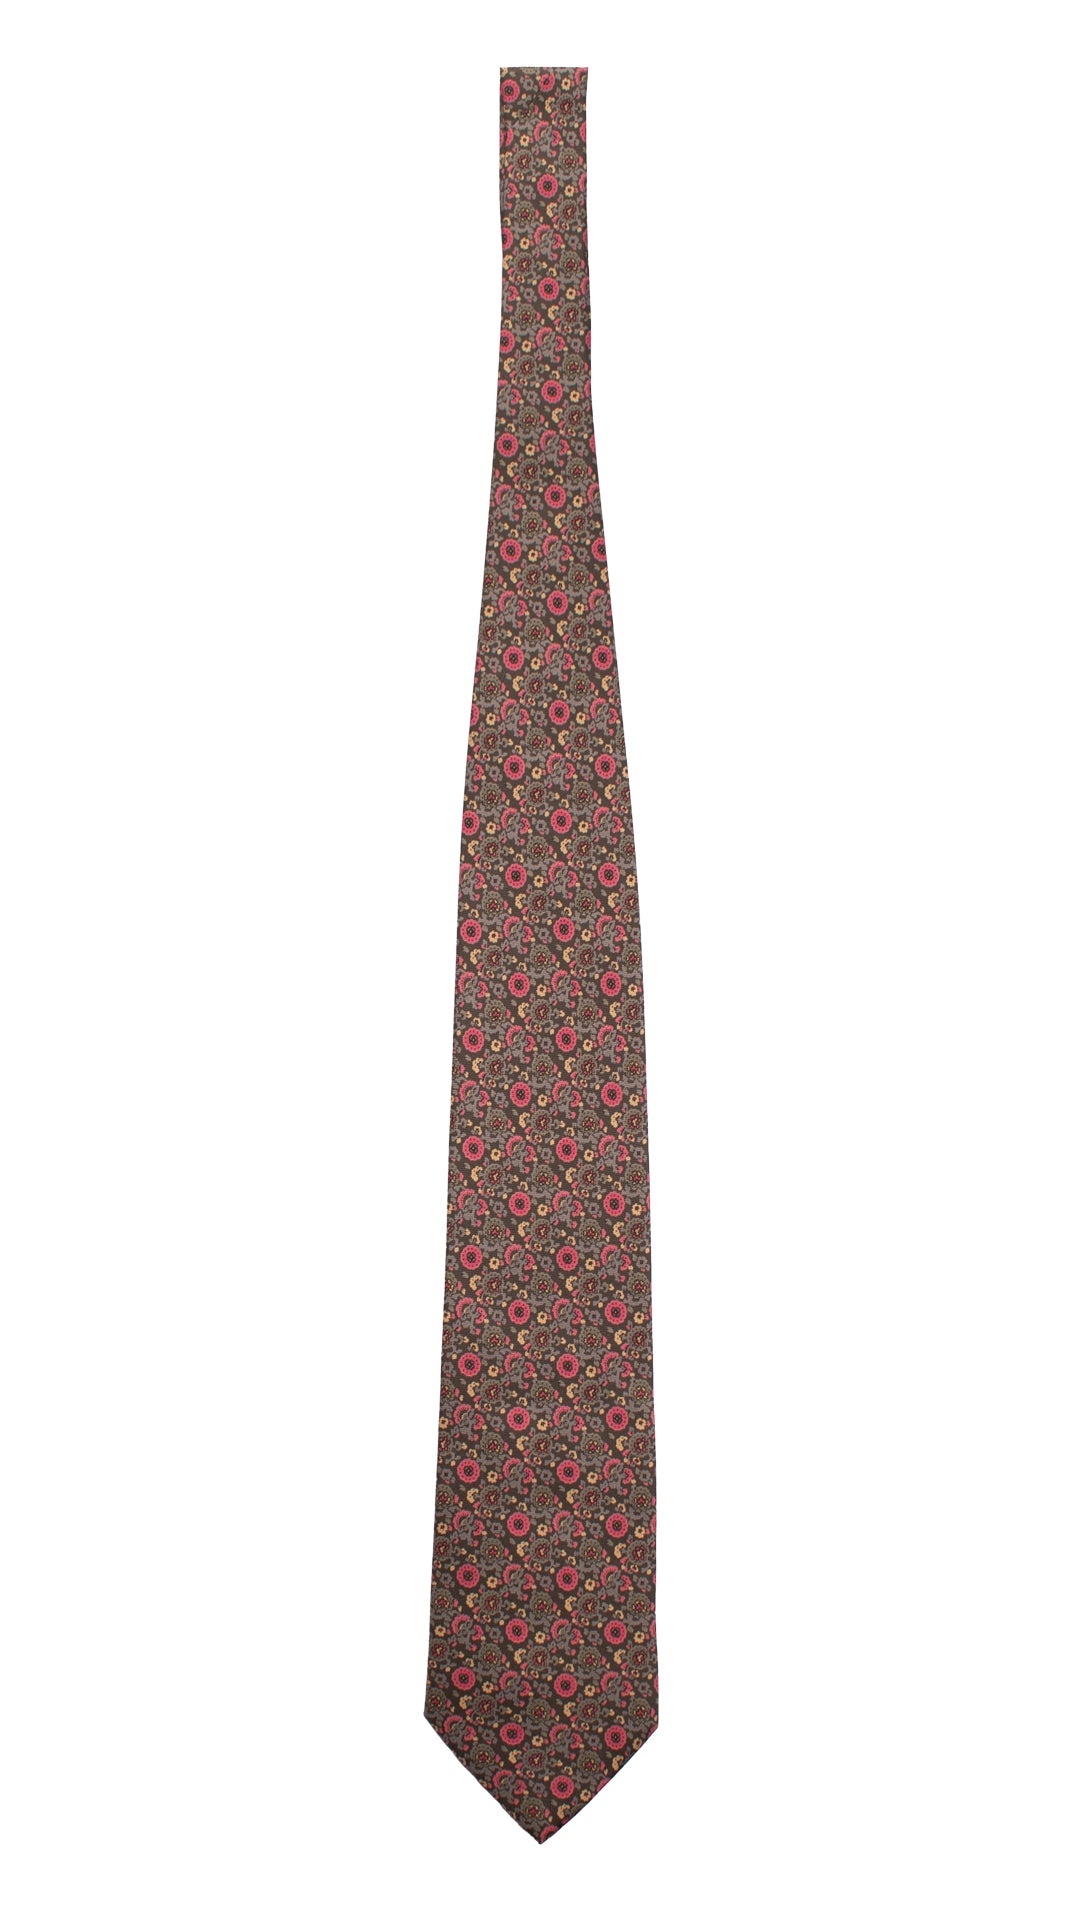 Cravatta Vintage in Twill di Seta Grigia A Fiori Magenta Grigi Beige CV765 Intera